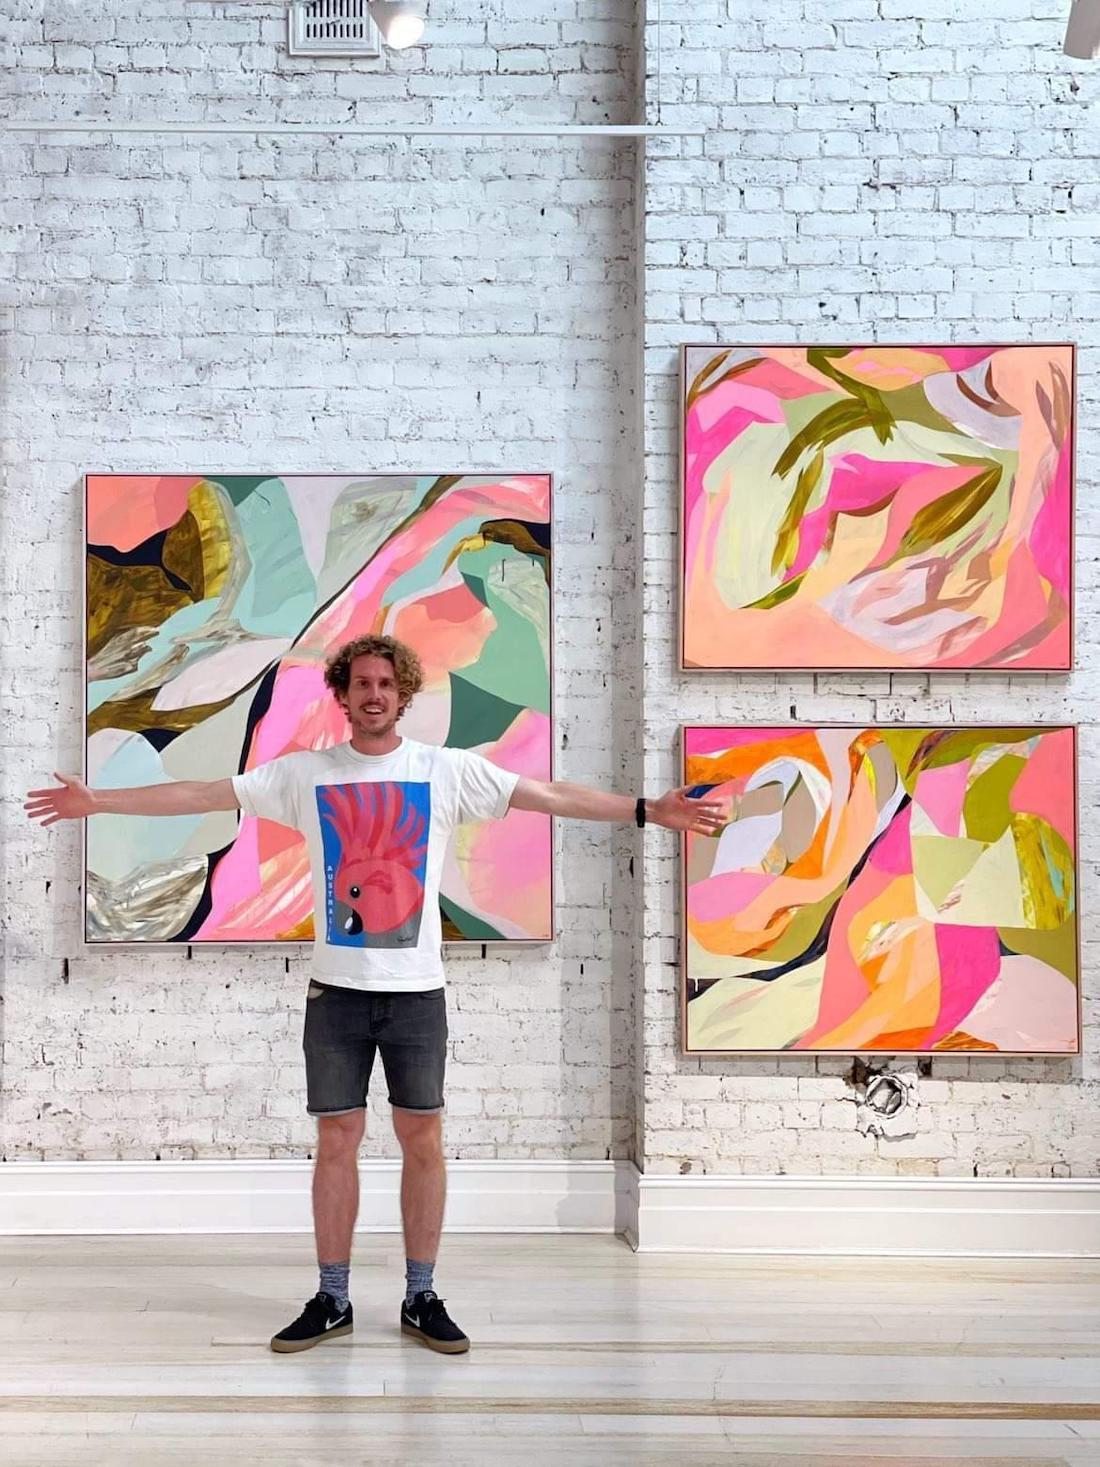 Pink artworks from Superabundance exhibition via Jumbled by Chris de Hoog